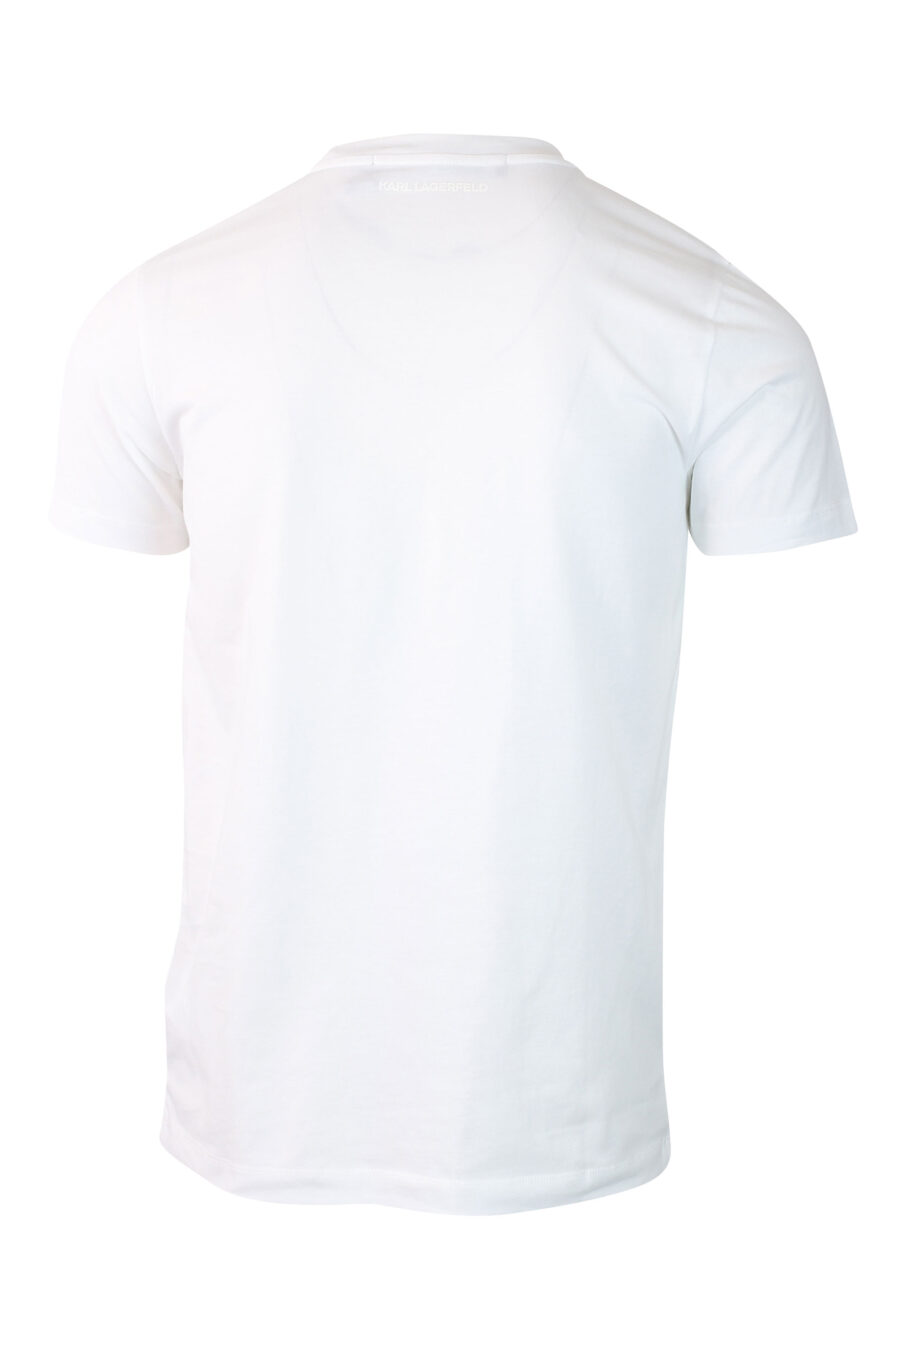 Camiseta blanca con logo holográfico "rue st guillaume" - IMG 0111